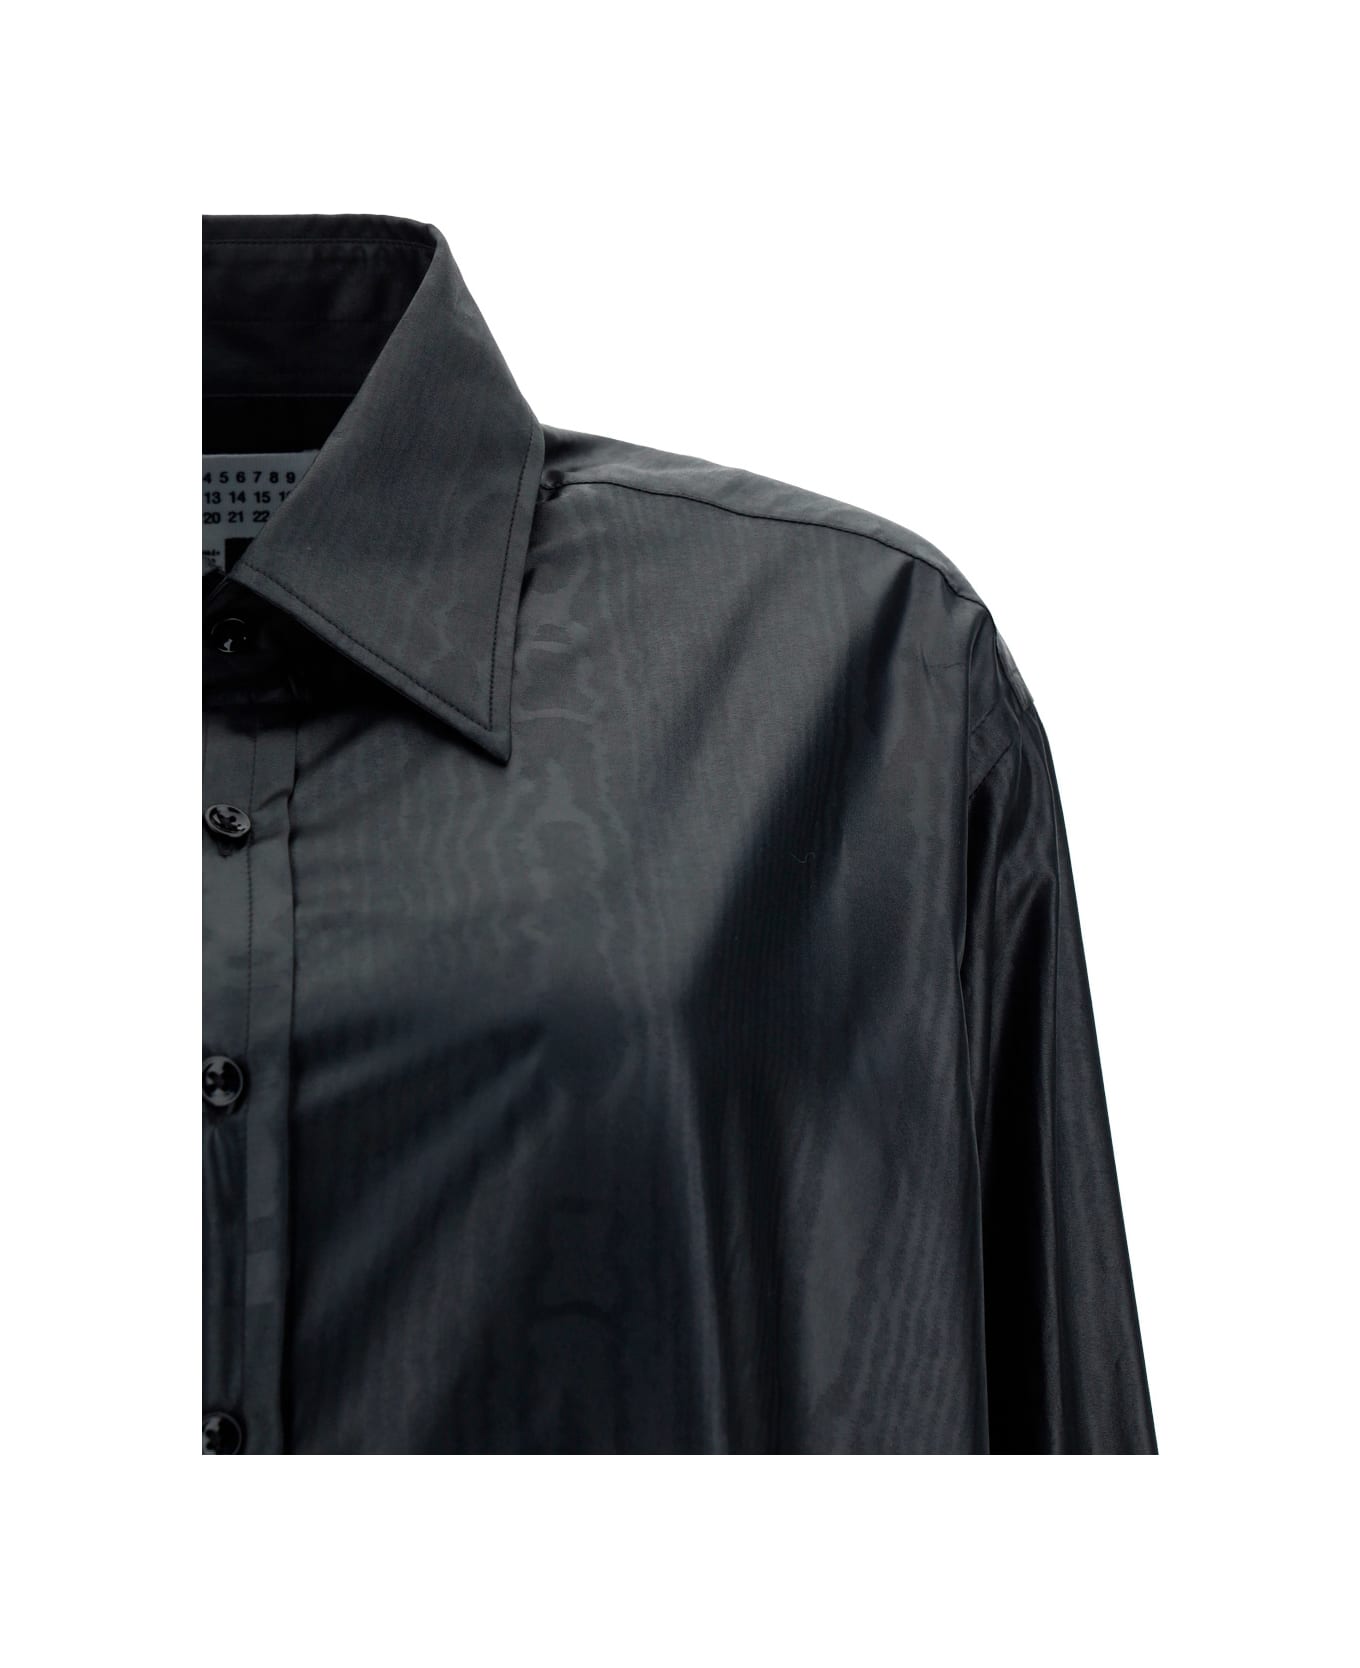 Maison Margiela Long Shirt With Classic Collar - Black シャツ